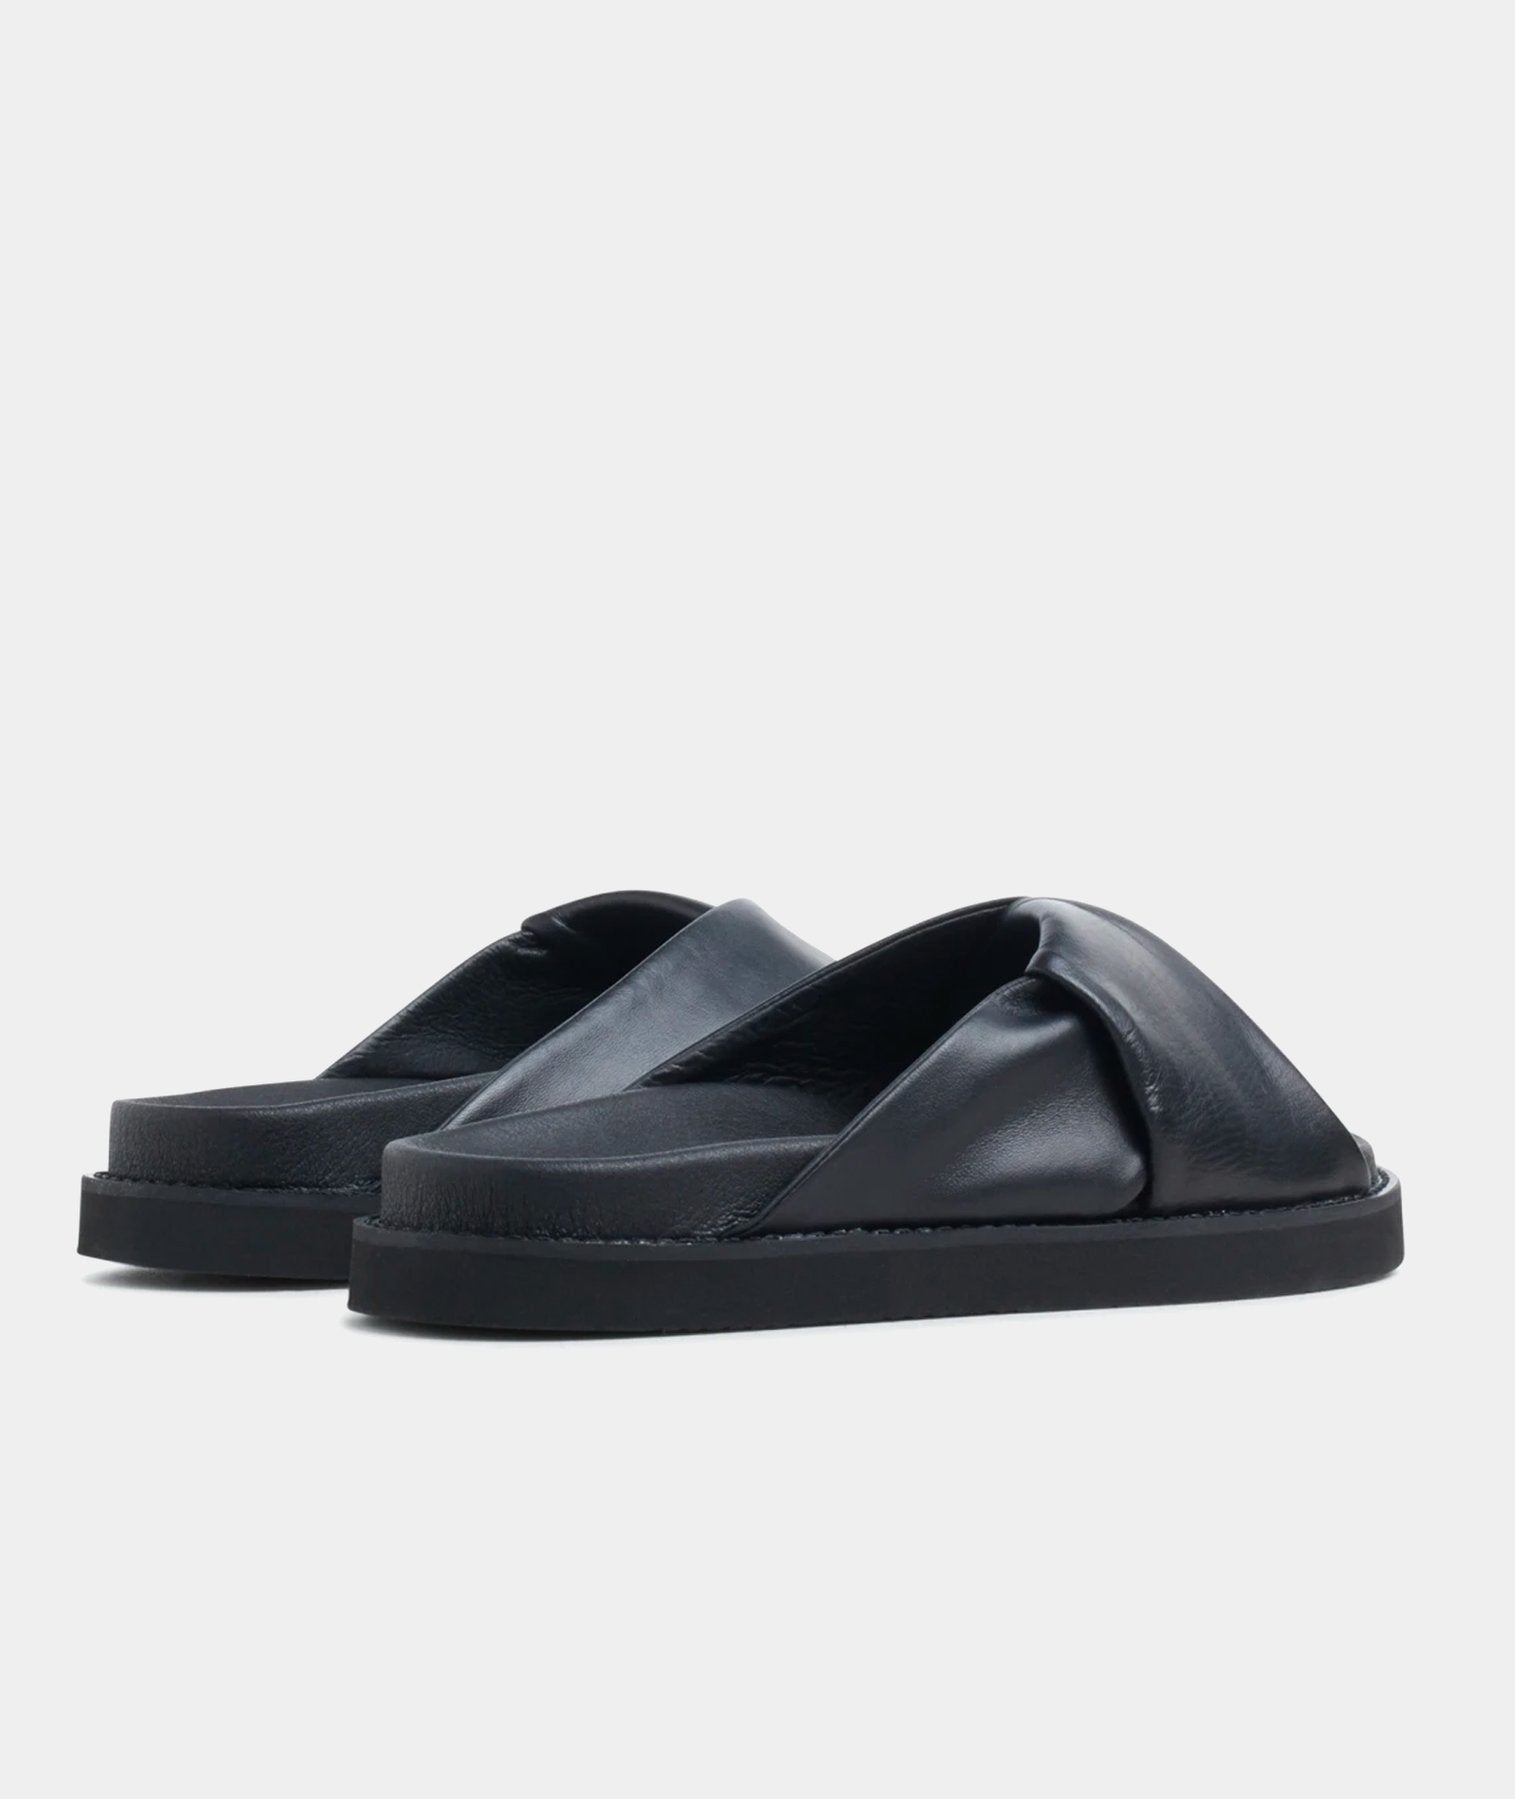 Yodoa Sandals, black leather